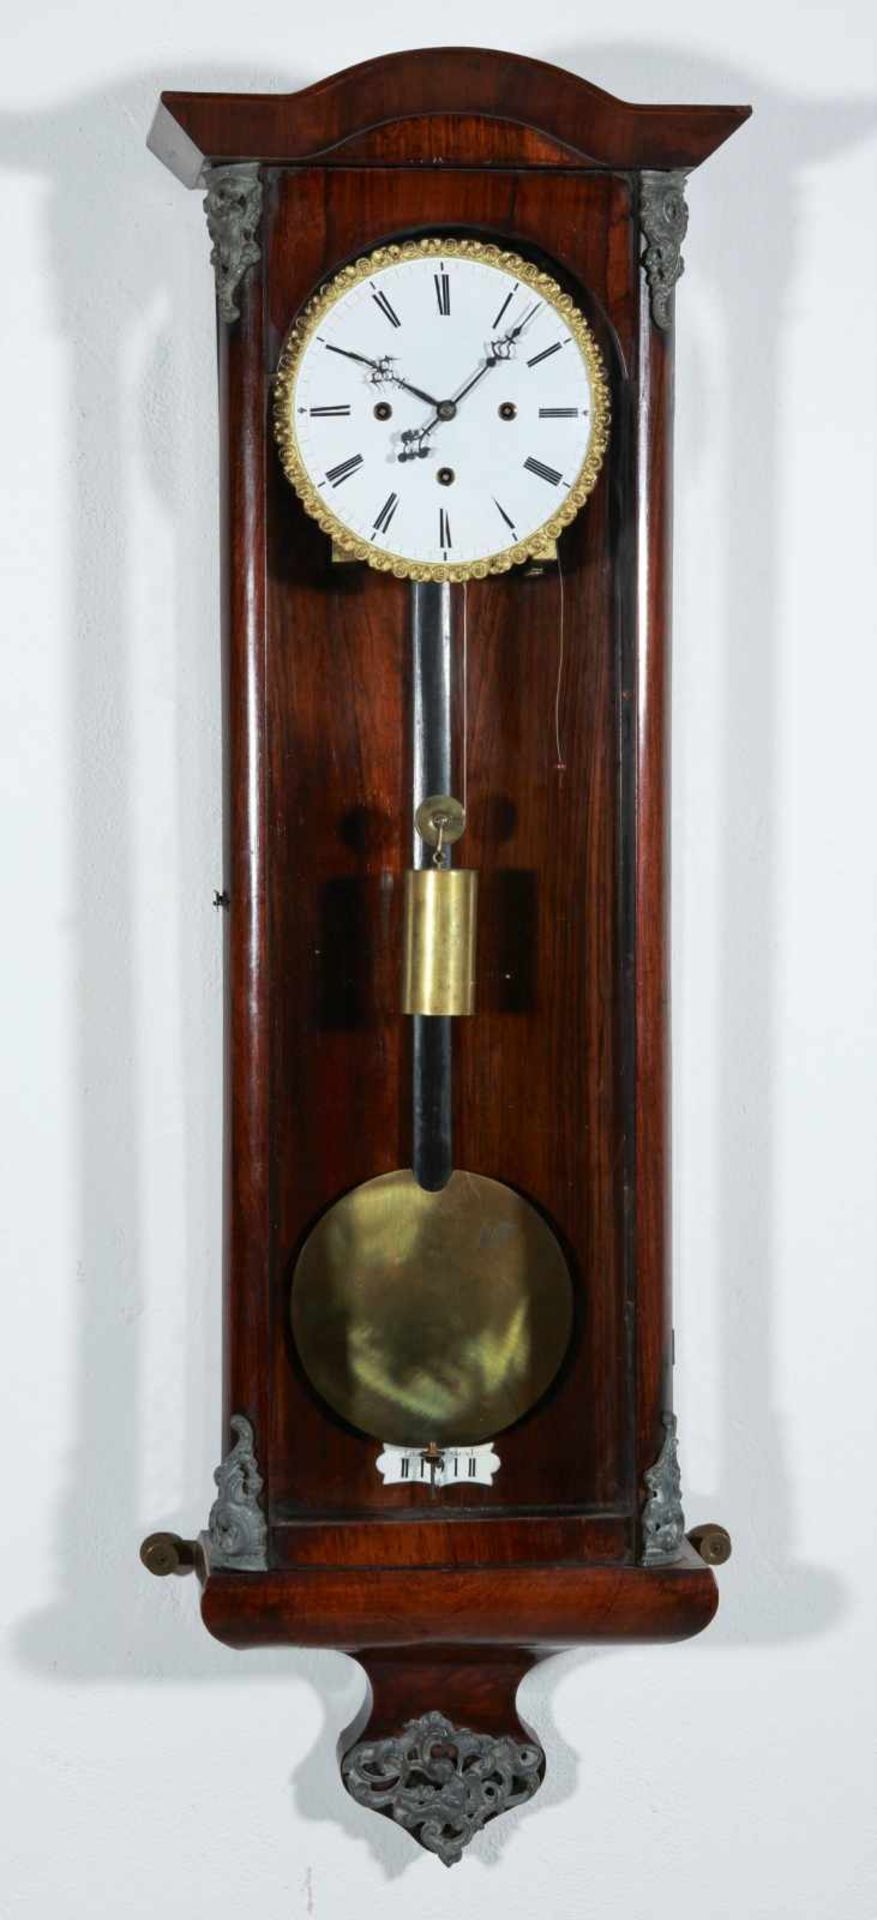 Wall pendulum clock - Jan Witt Bohemia, circa 1850, movement labeled Jan. Witt. V. Ousti, Graham